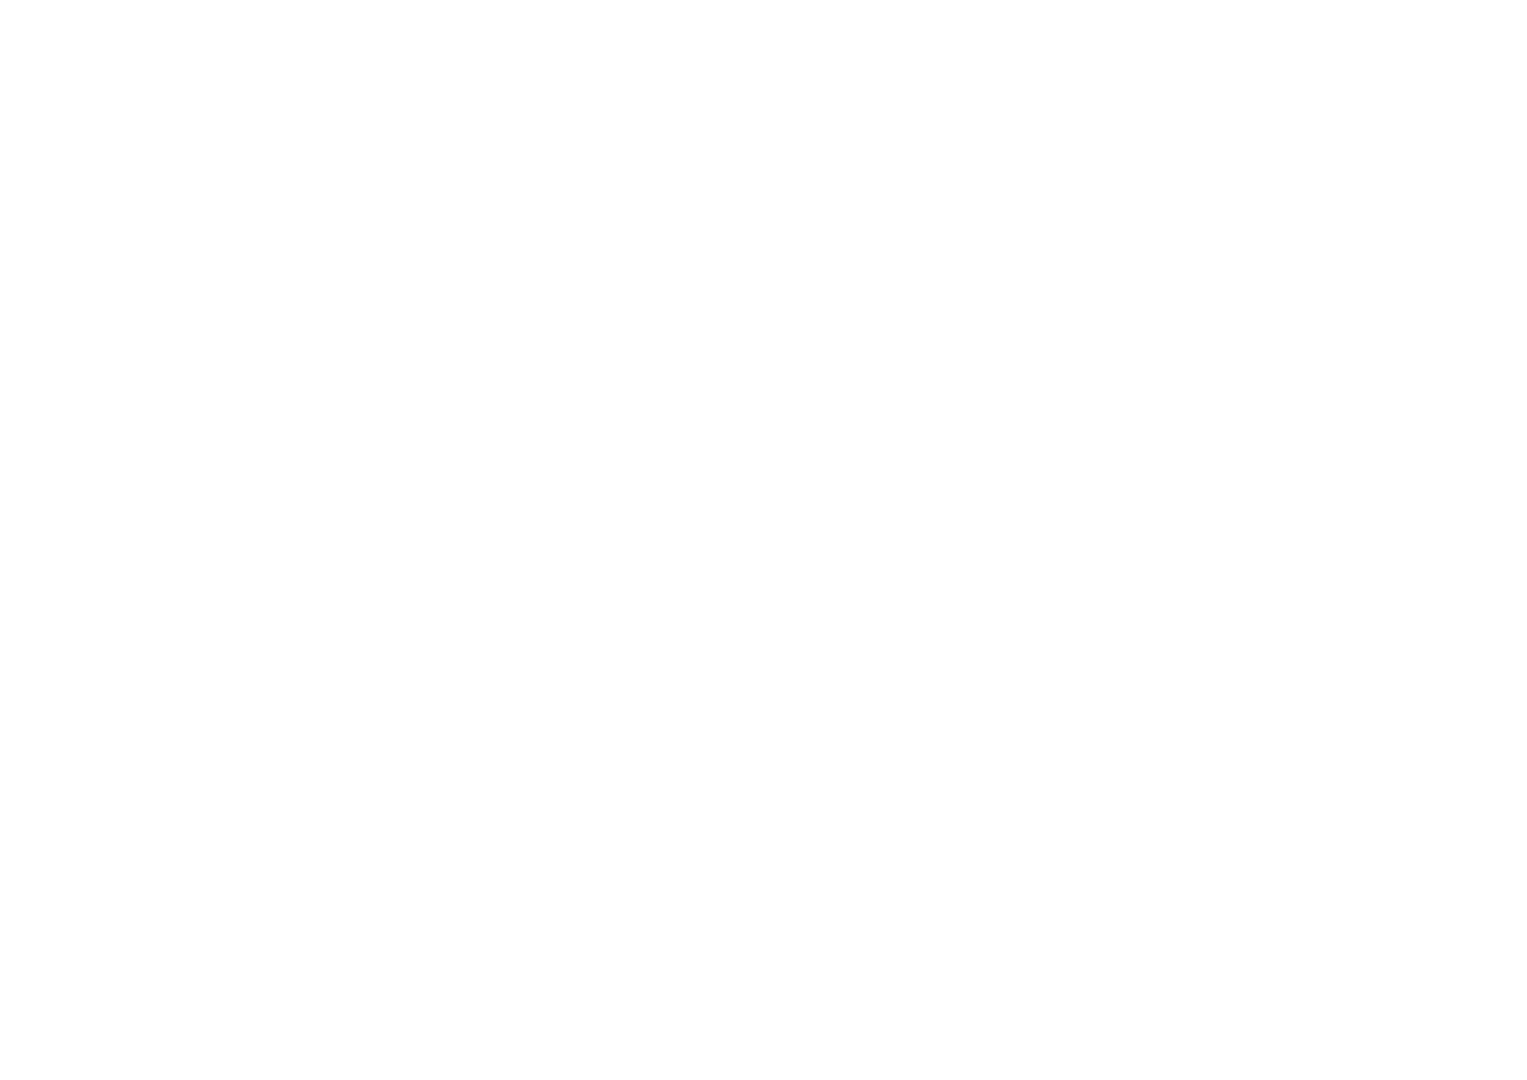 gambleaware helpline logo white